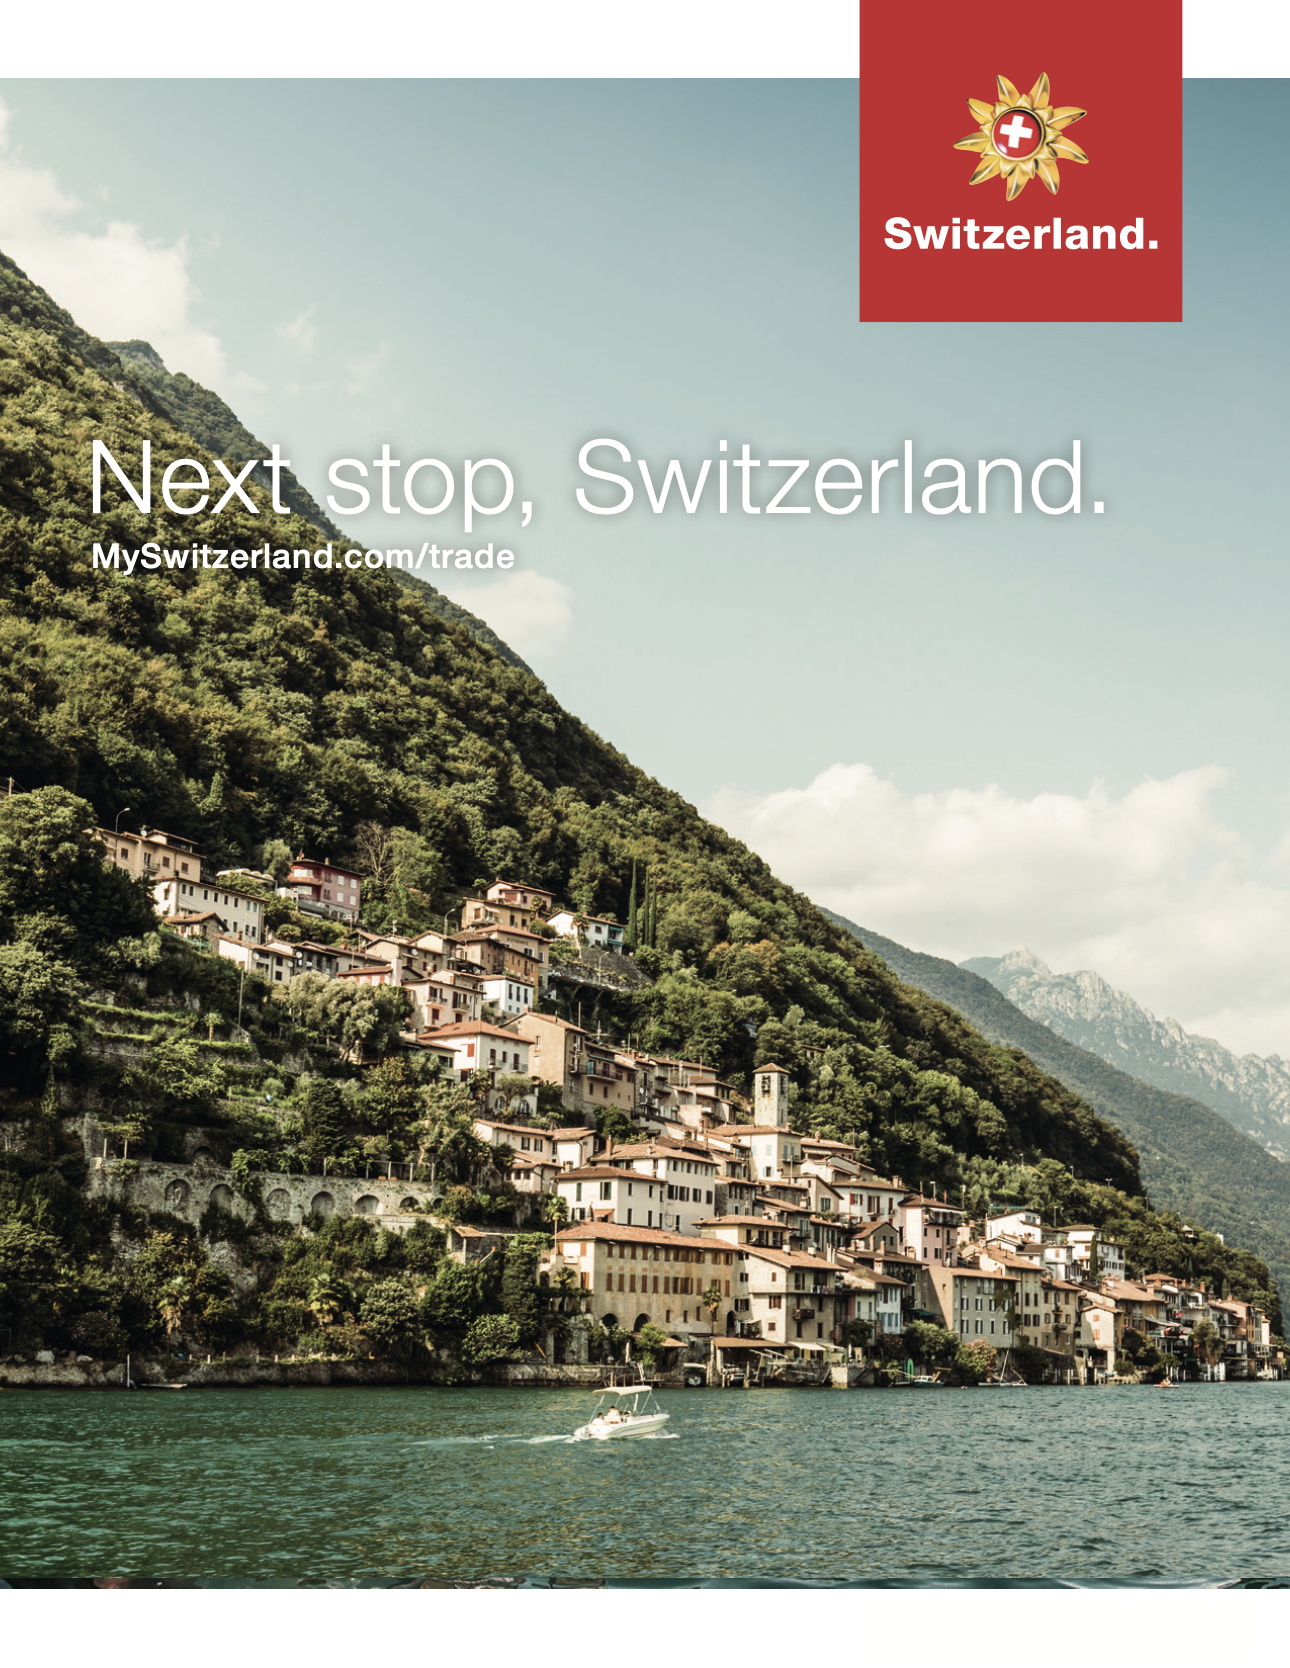 Discover Switzerland’s 48 Virtuoso properties